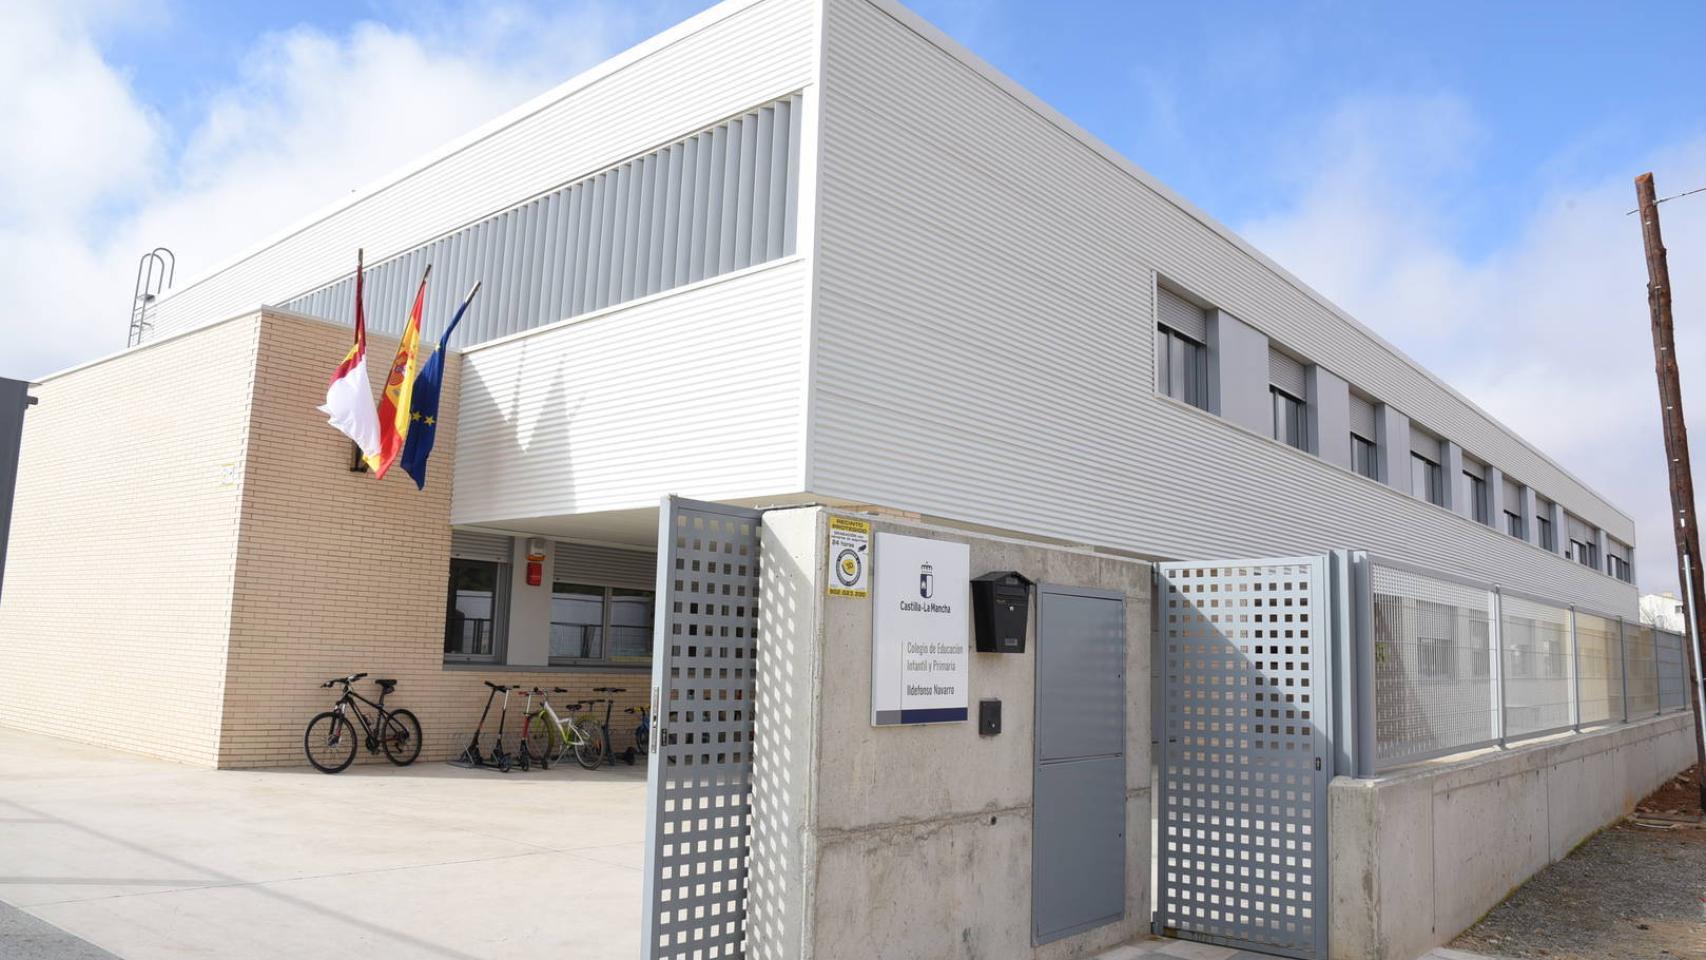 Page inaugura el colegio 'Ildefonso Navarro' en Villamalea (Albacete) 1